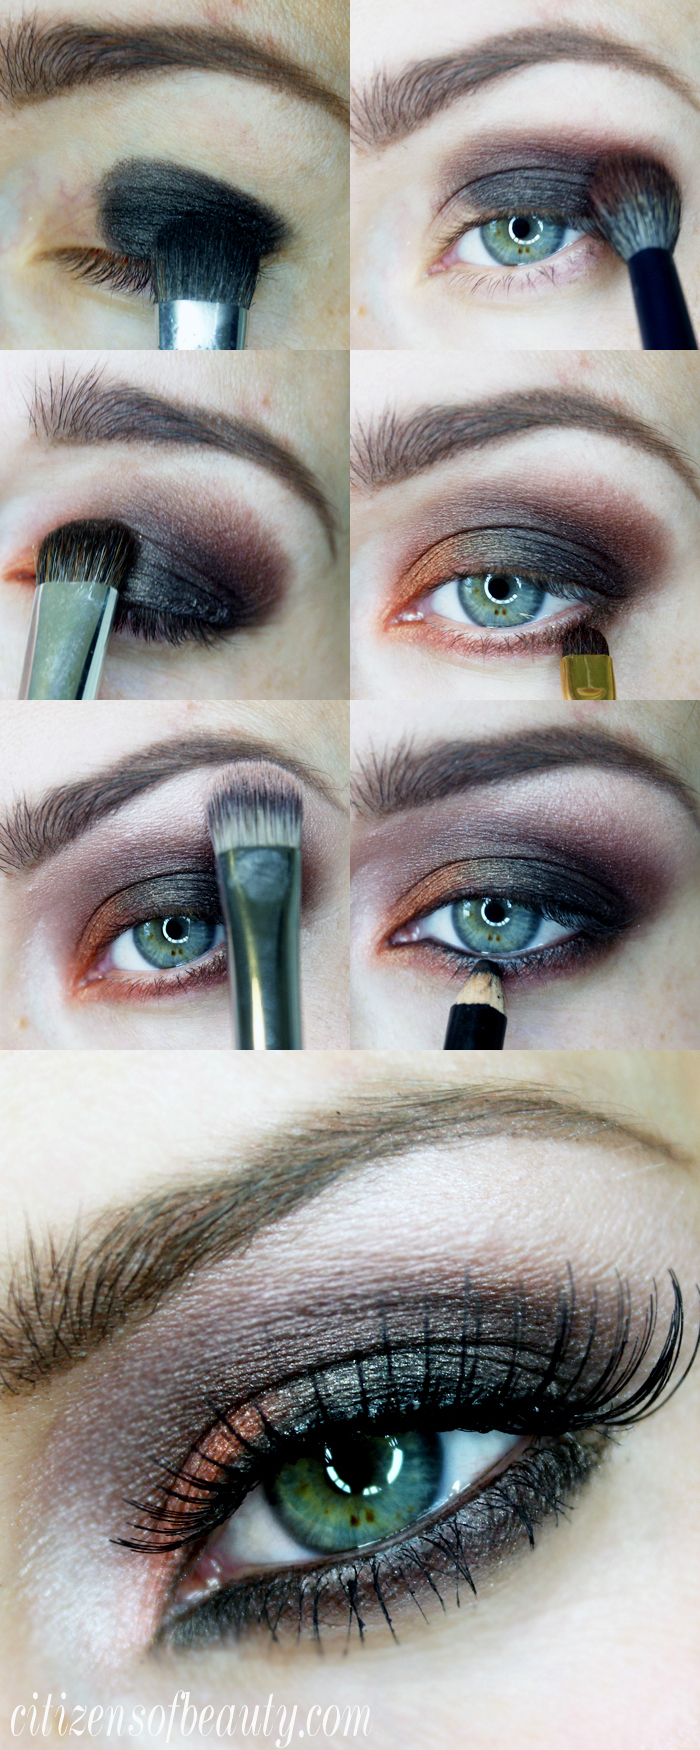 Eye Makeup For Halloween Orange And Black Halloween Eyeshadow Design Citizens Of Beauty